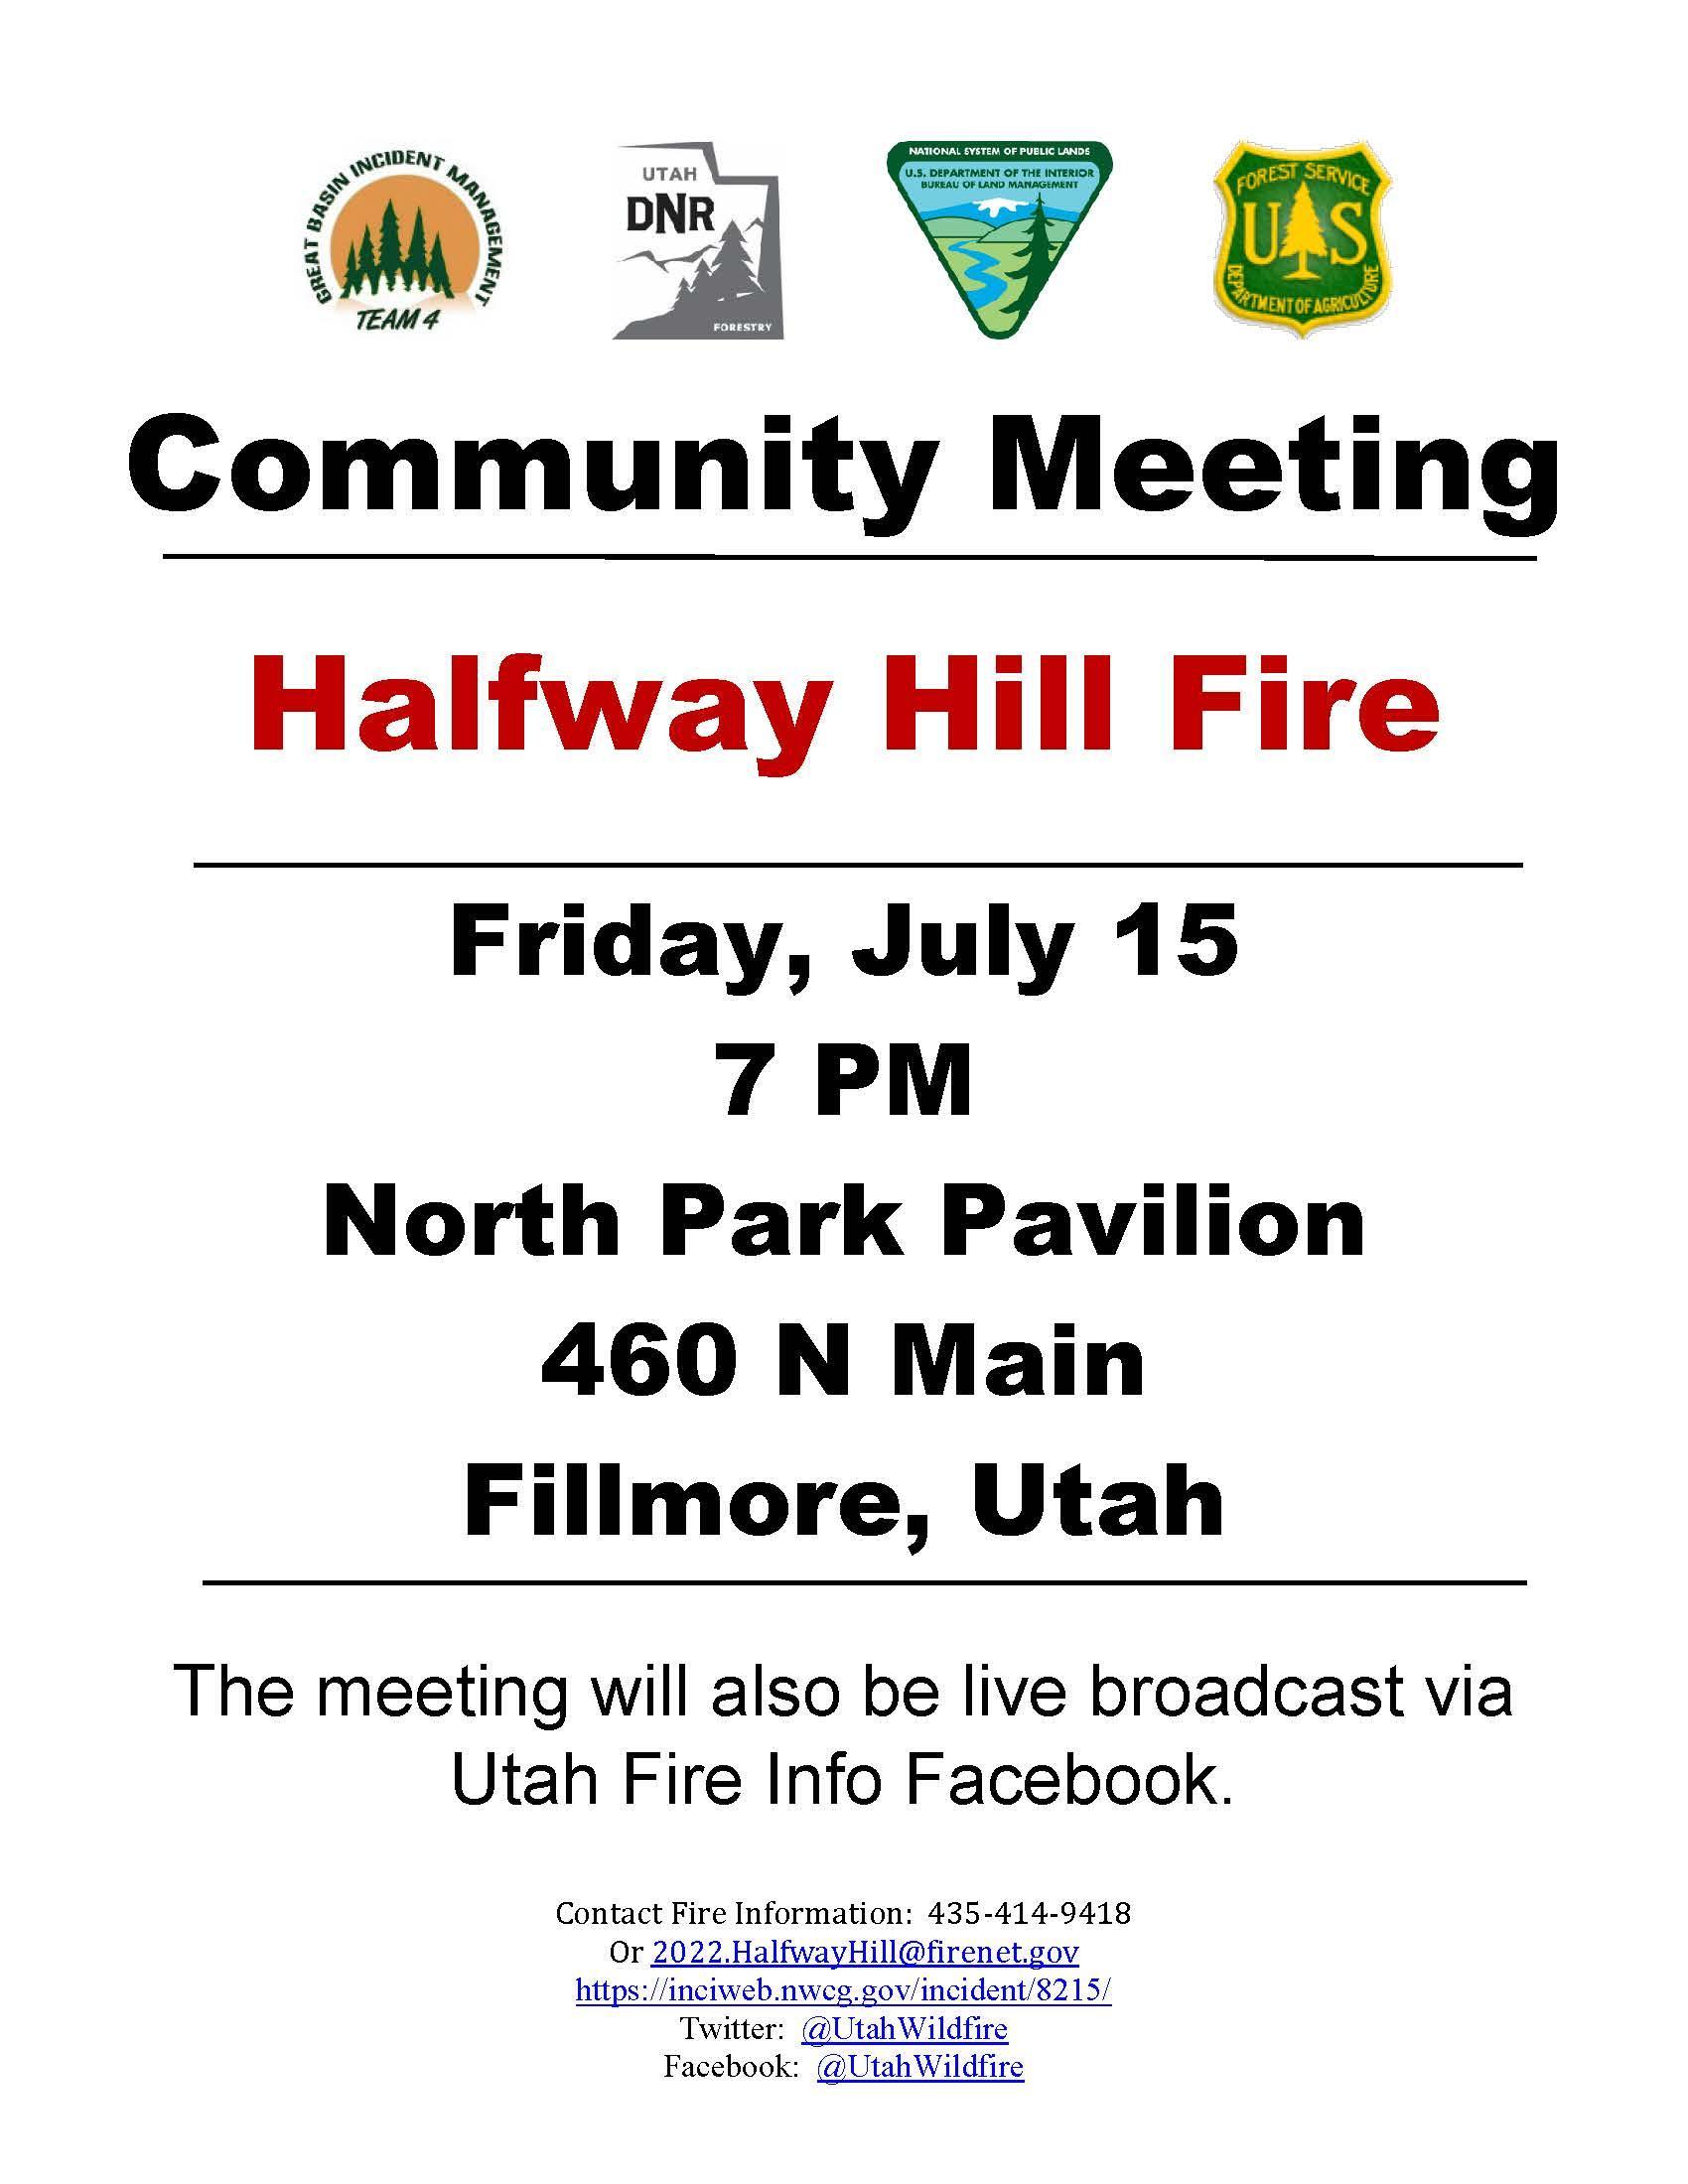 Community Meeting 7/15 7 PM, North Park Pavilion, Fillmore, broadcast via Facebook LIve